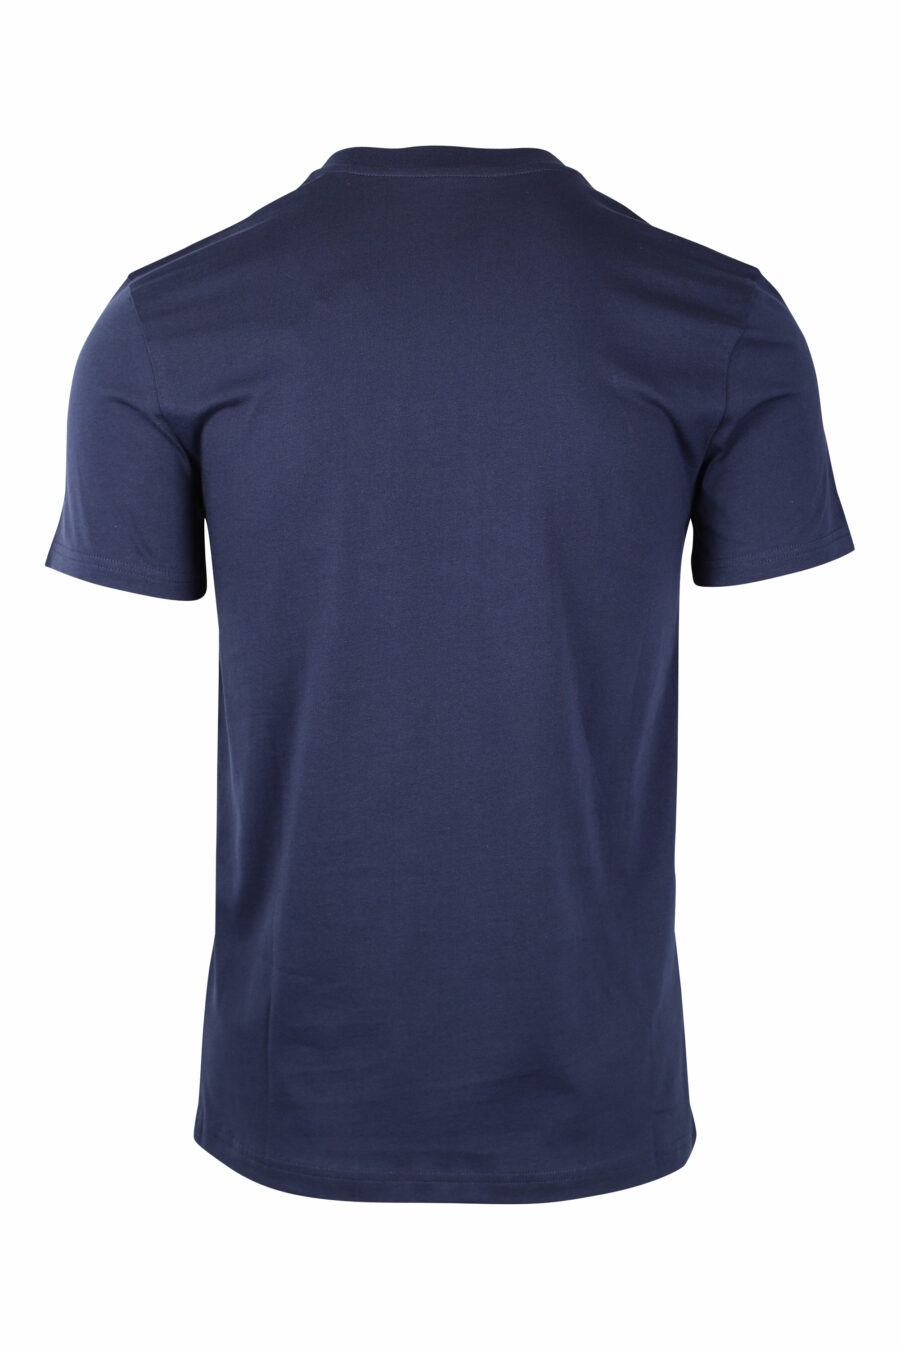 T-shirt azul escura com maxilogo monocromático de dupla pergunta - IMG 1454